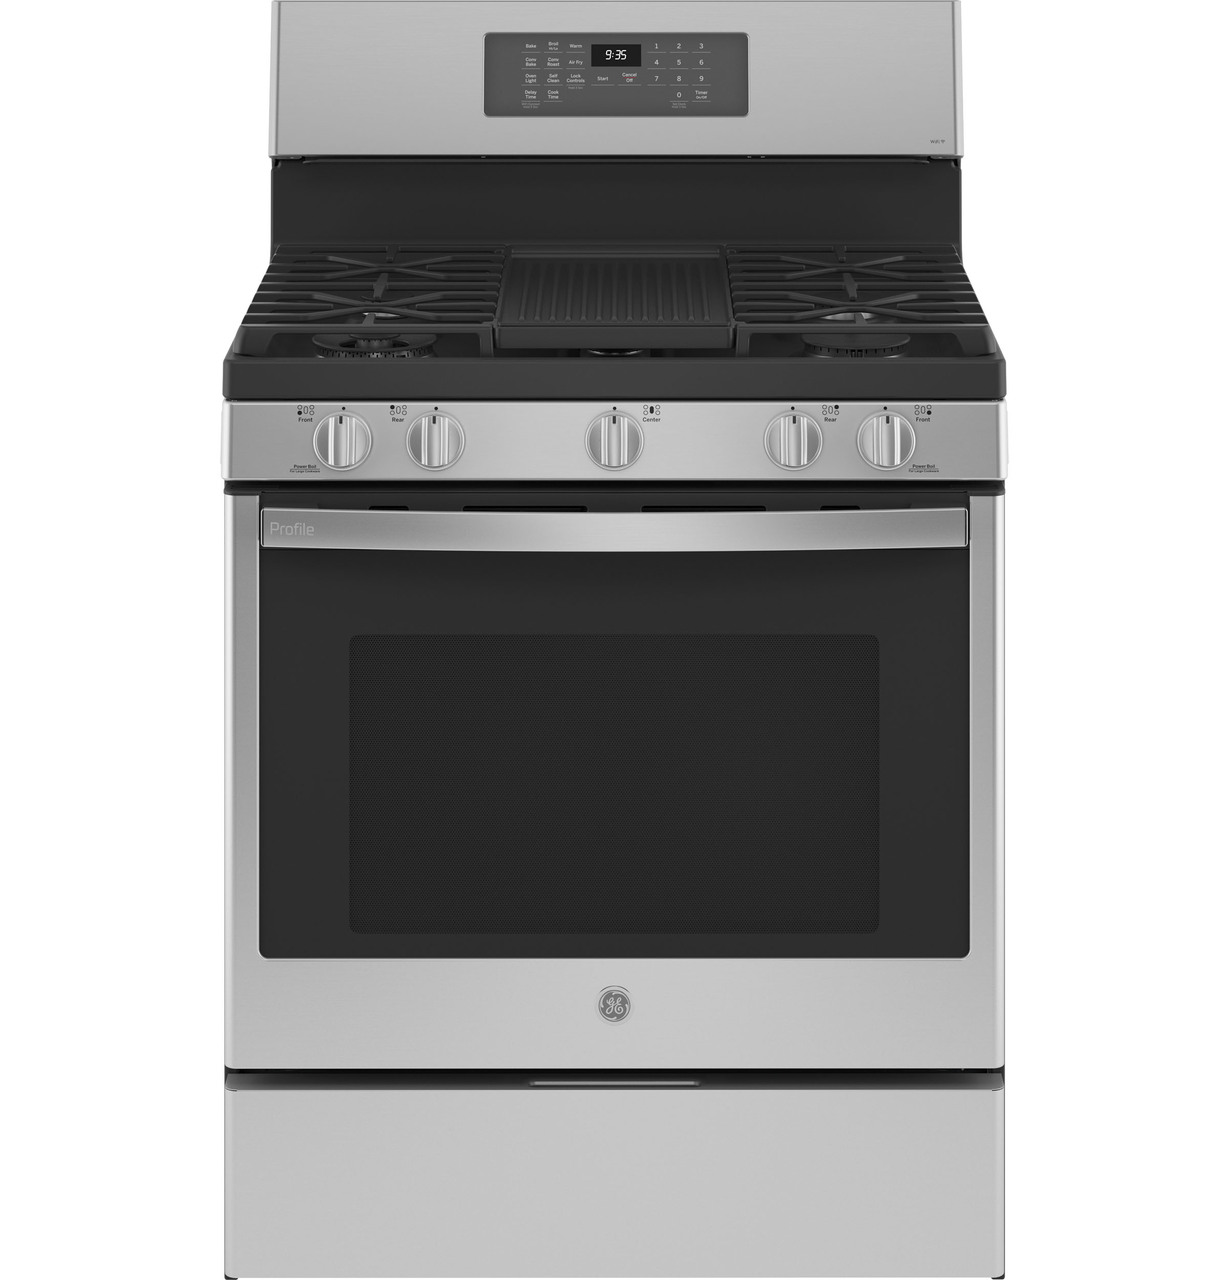 GE profile smart 30 inch slef clean duel fuel range oven